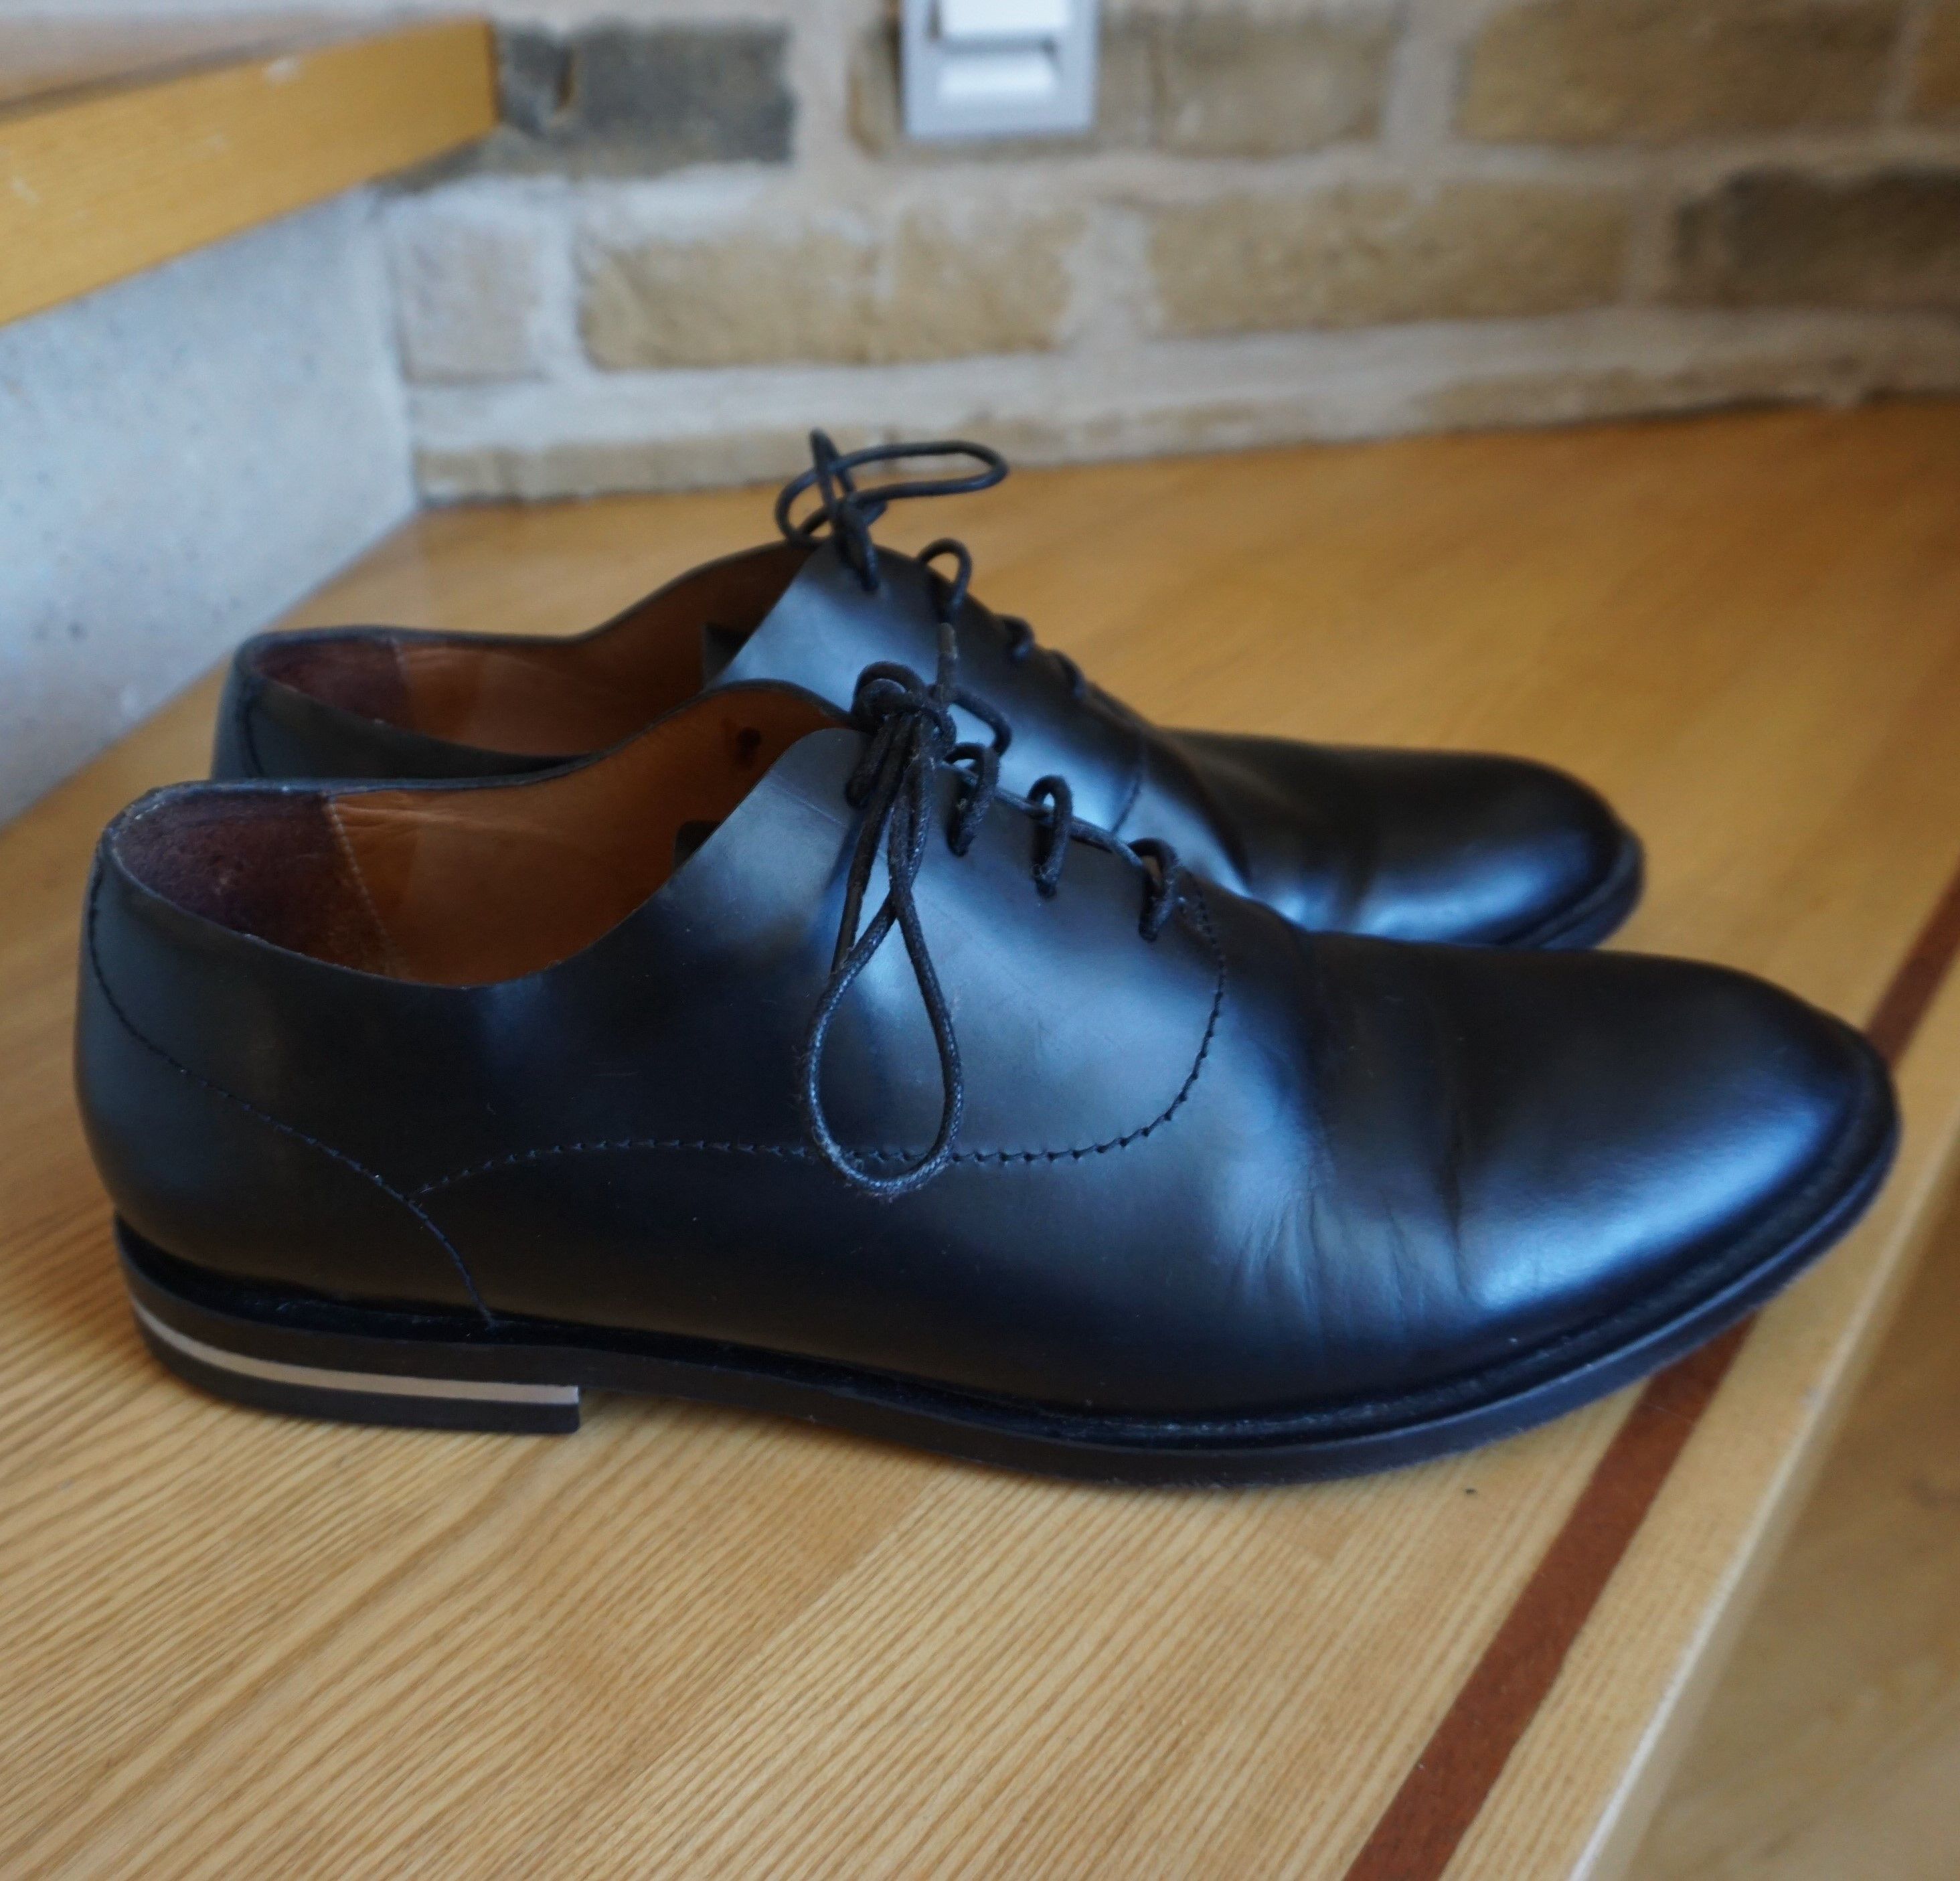 Cos COS RPR$250 leather office shoes EU44 black formal lace up Size US 10.5 / EU 43-44 - 25 Preview